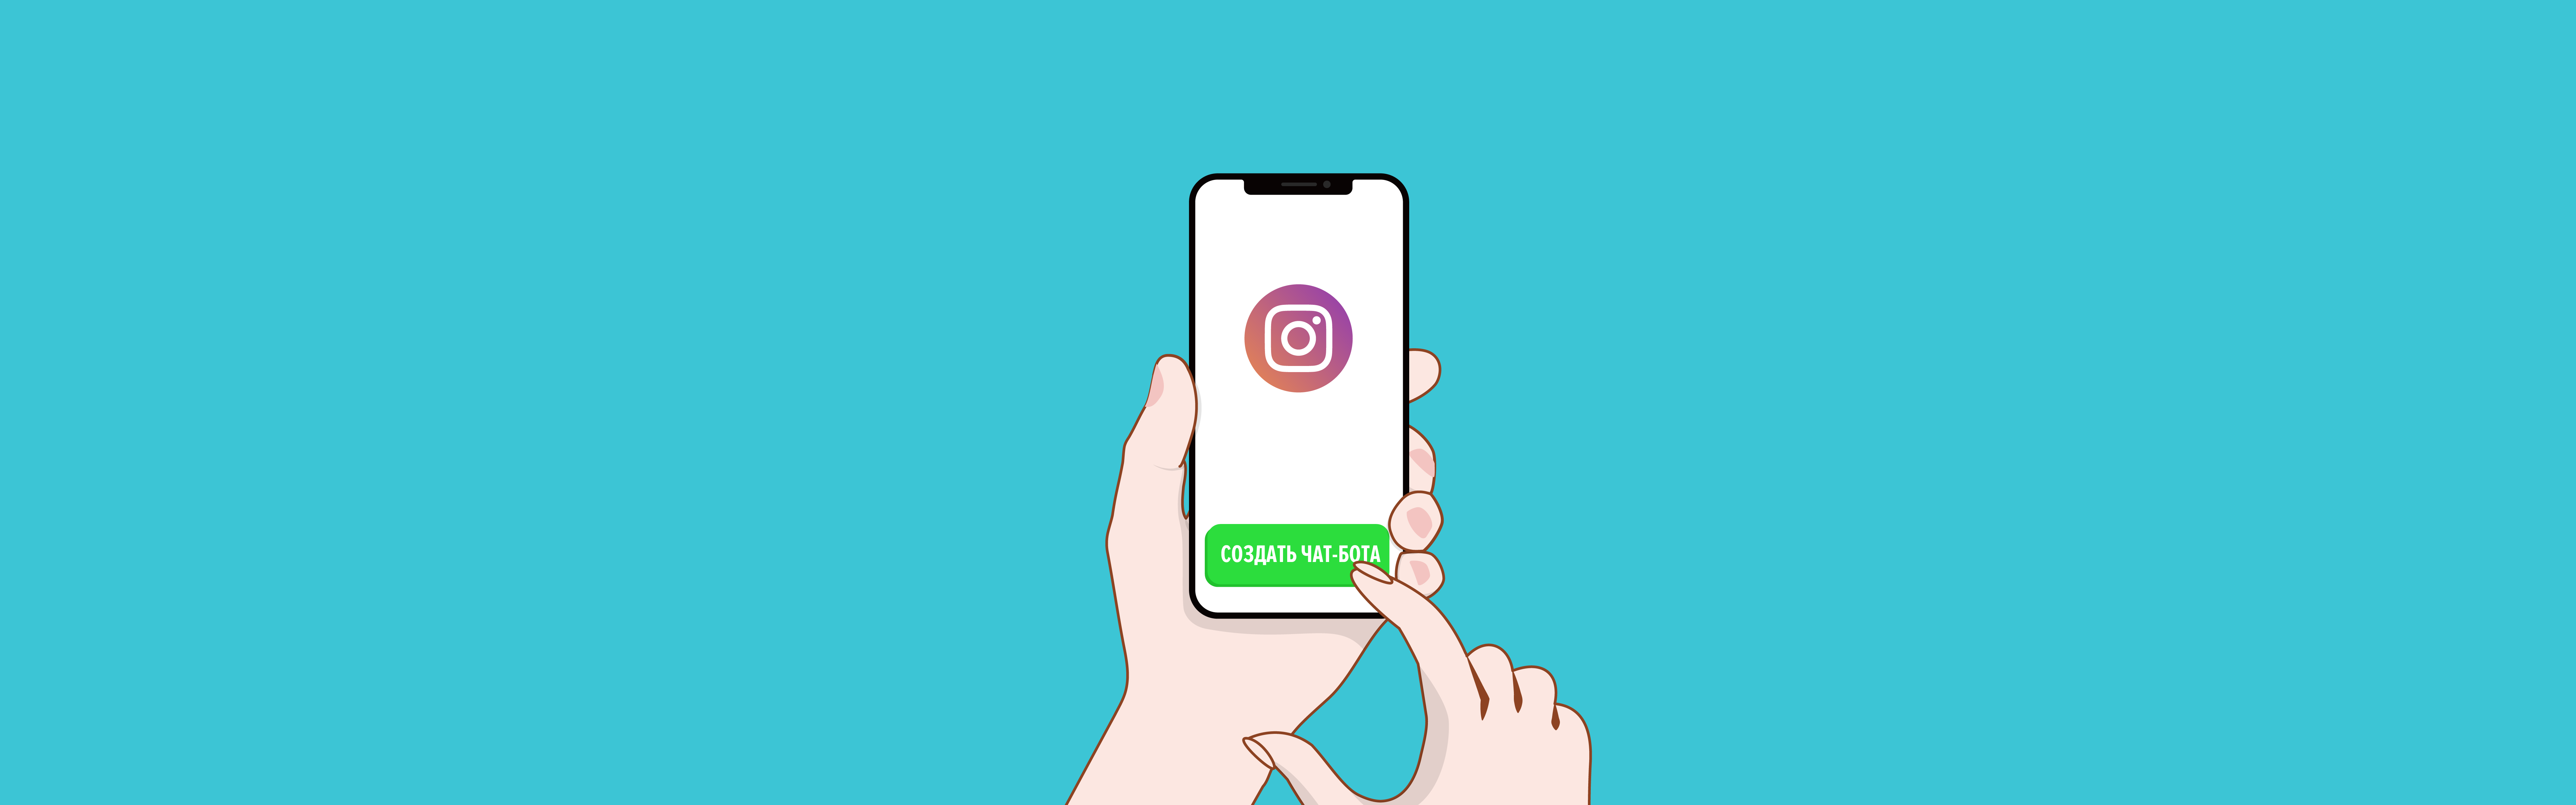 How to Create an Instagram Chatbot for Your Business with SendPulse[:ru]Как создать чат-бота в Инстаграм для бизнеса